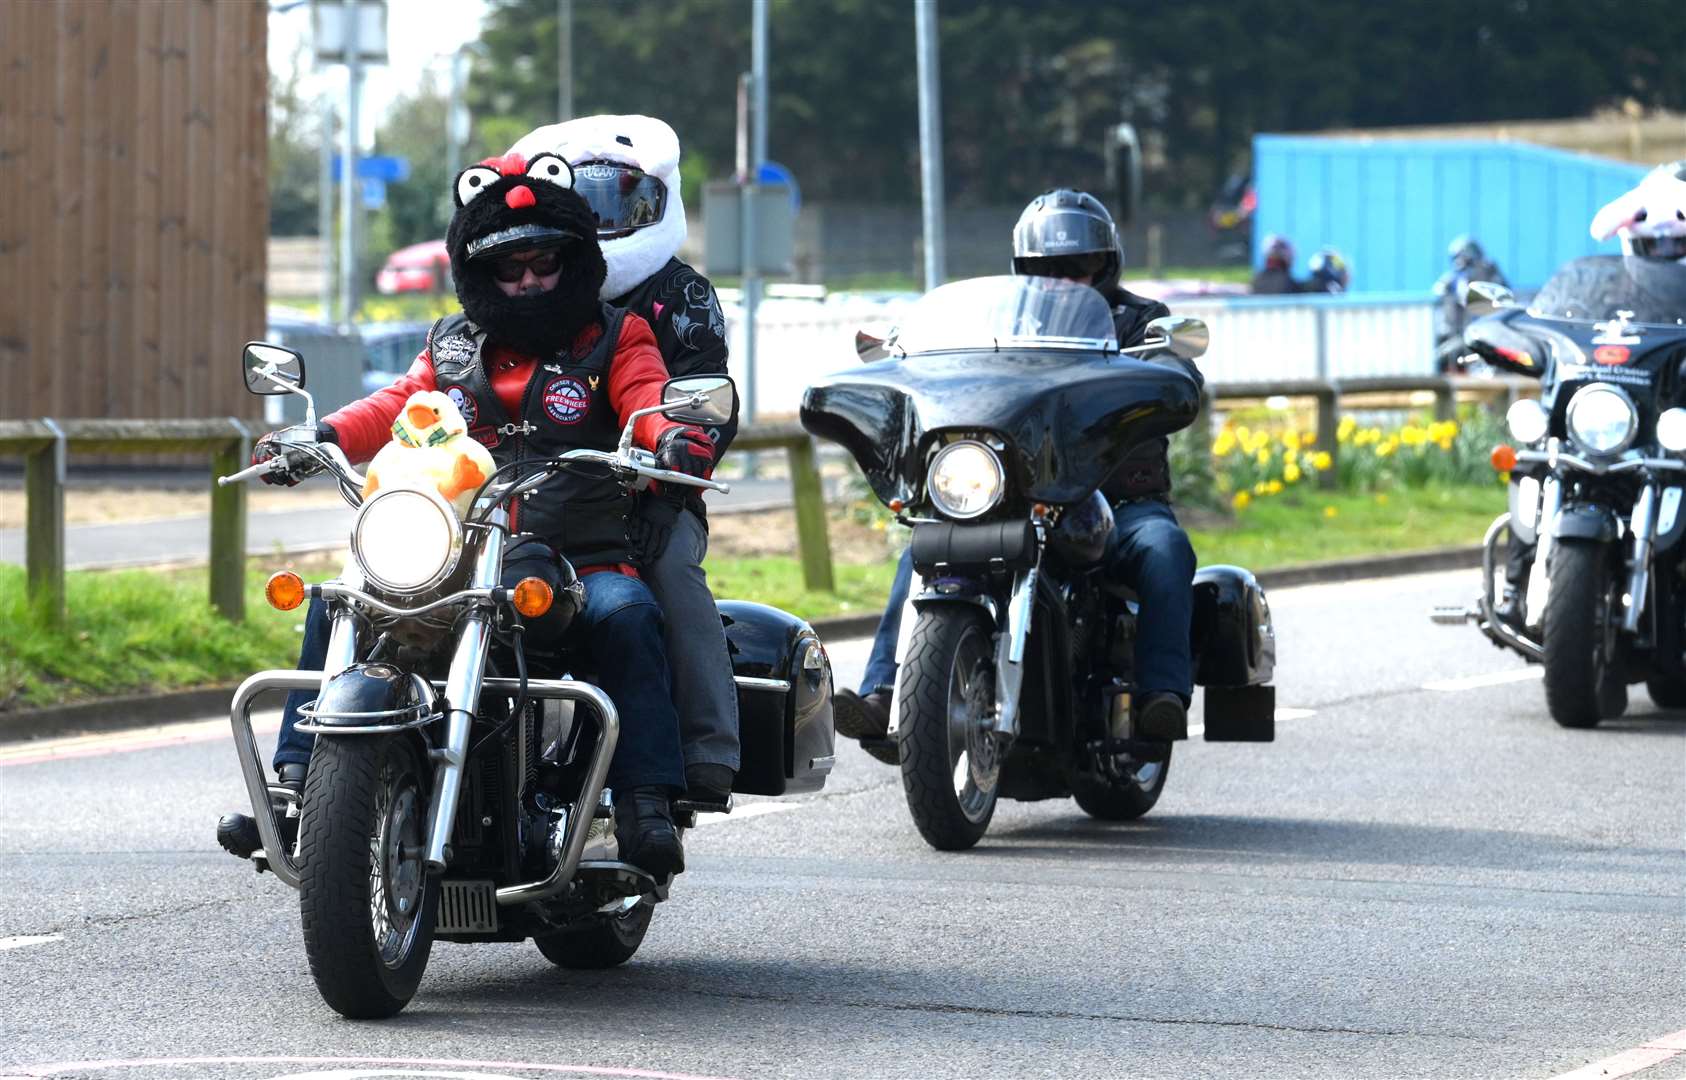 Kawasaki riders on their way to the QEH